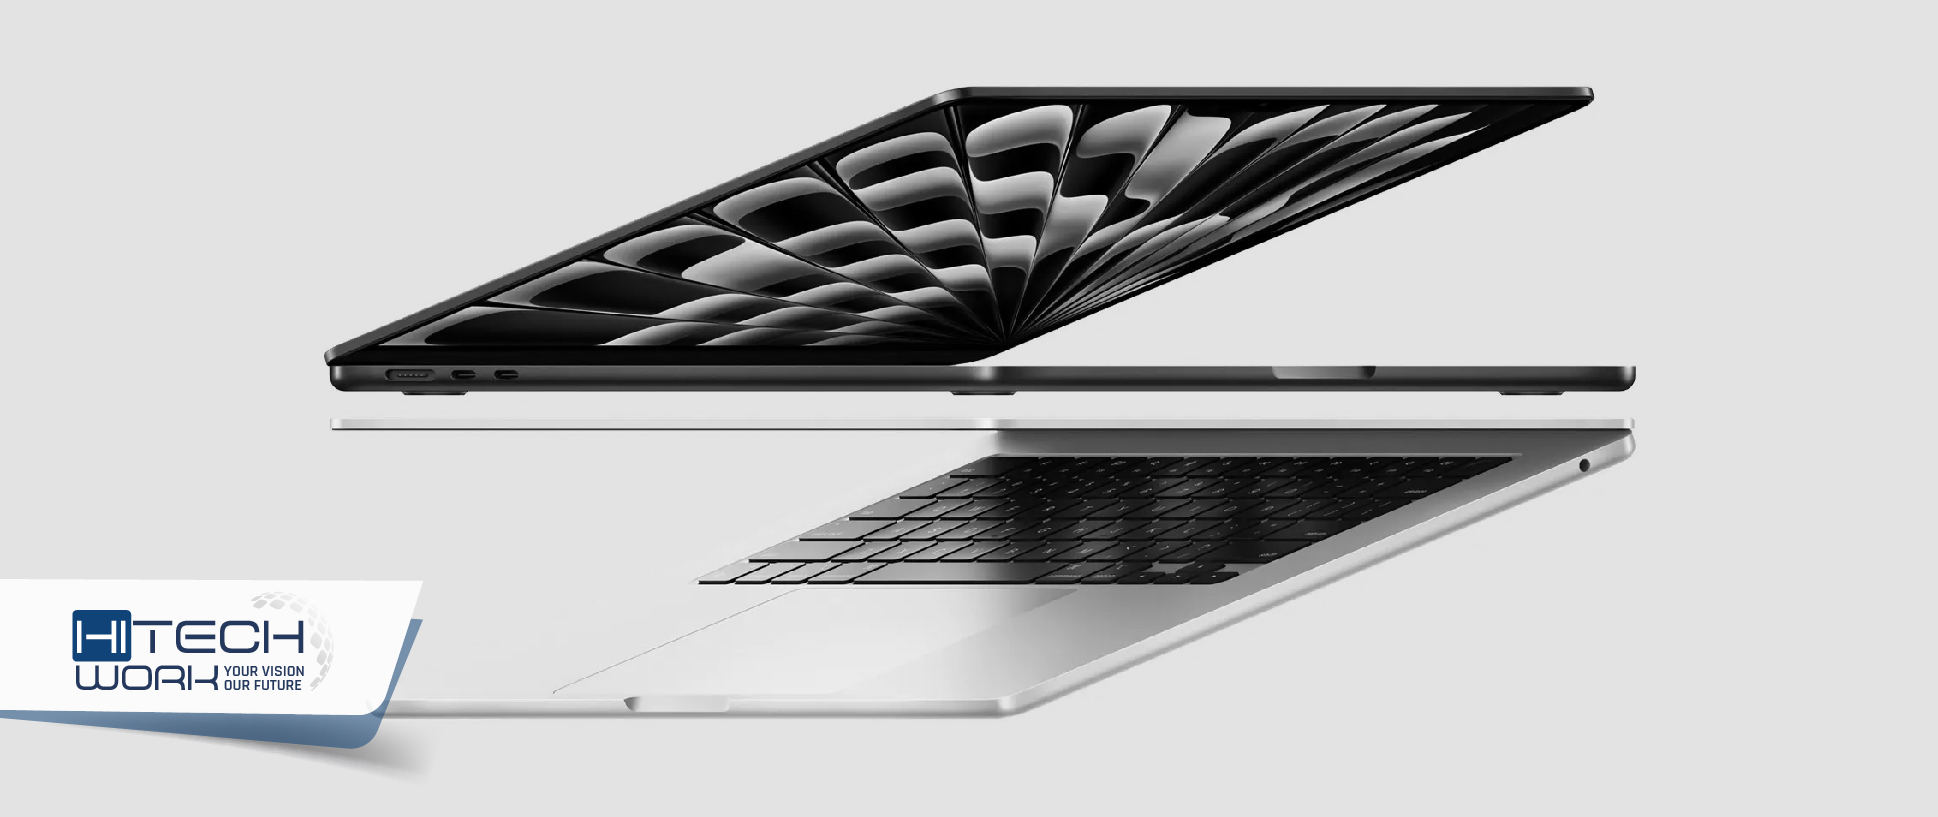 Apple Launches MacBook Air